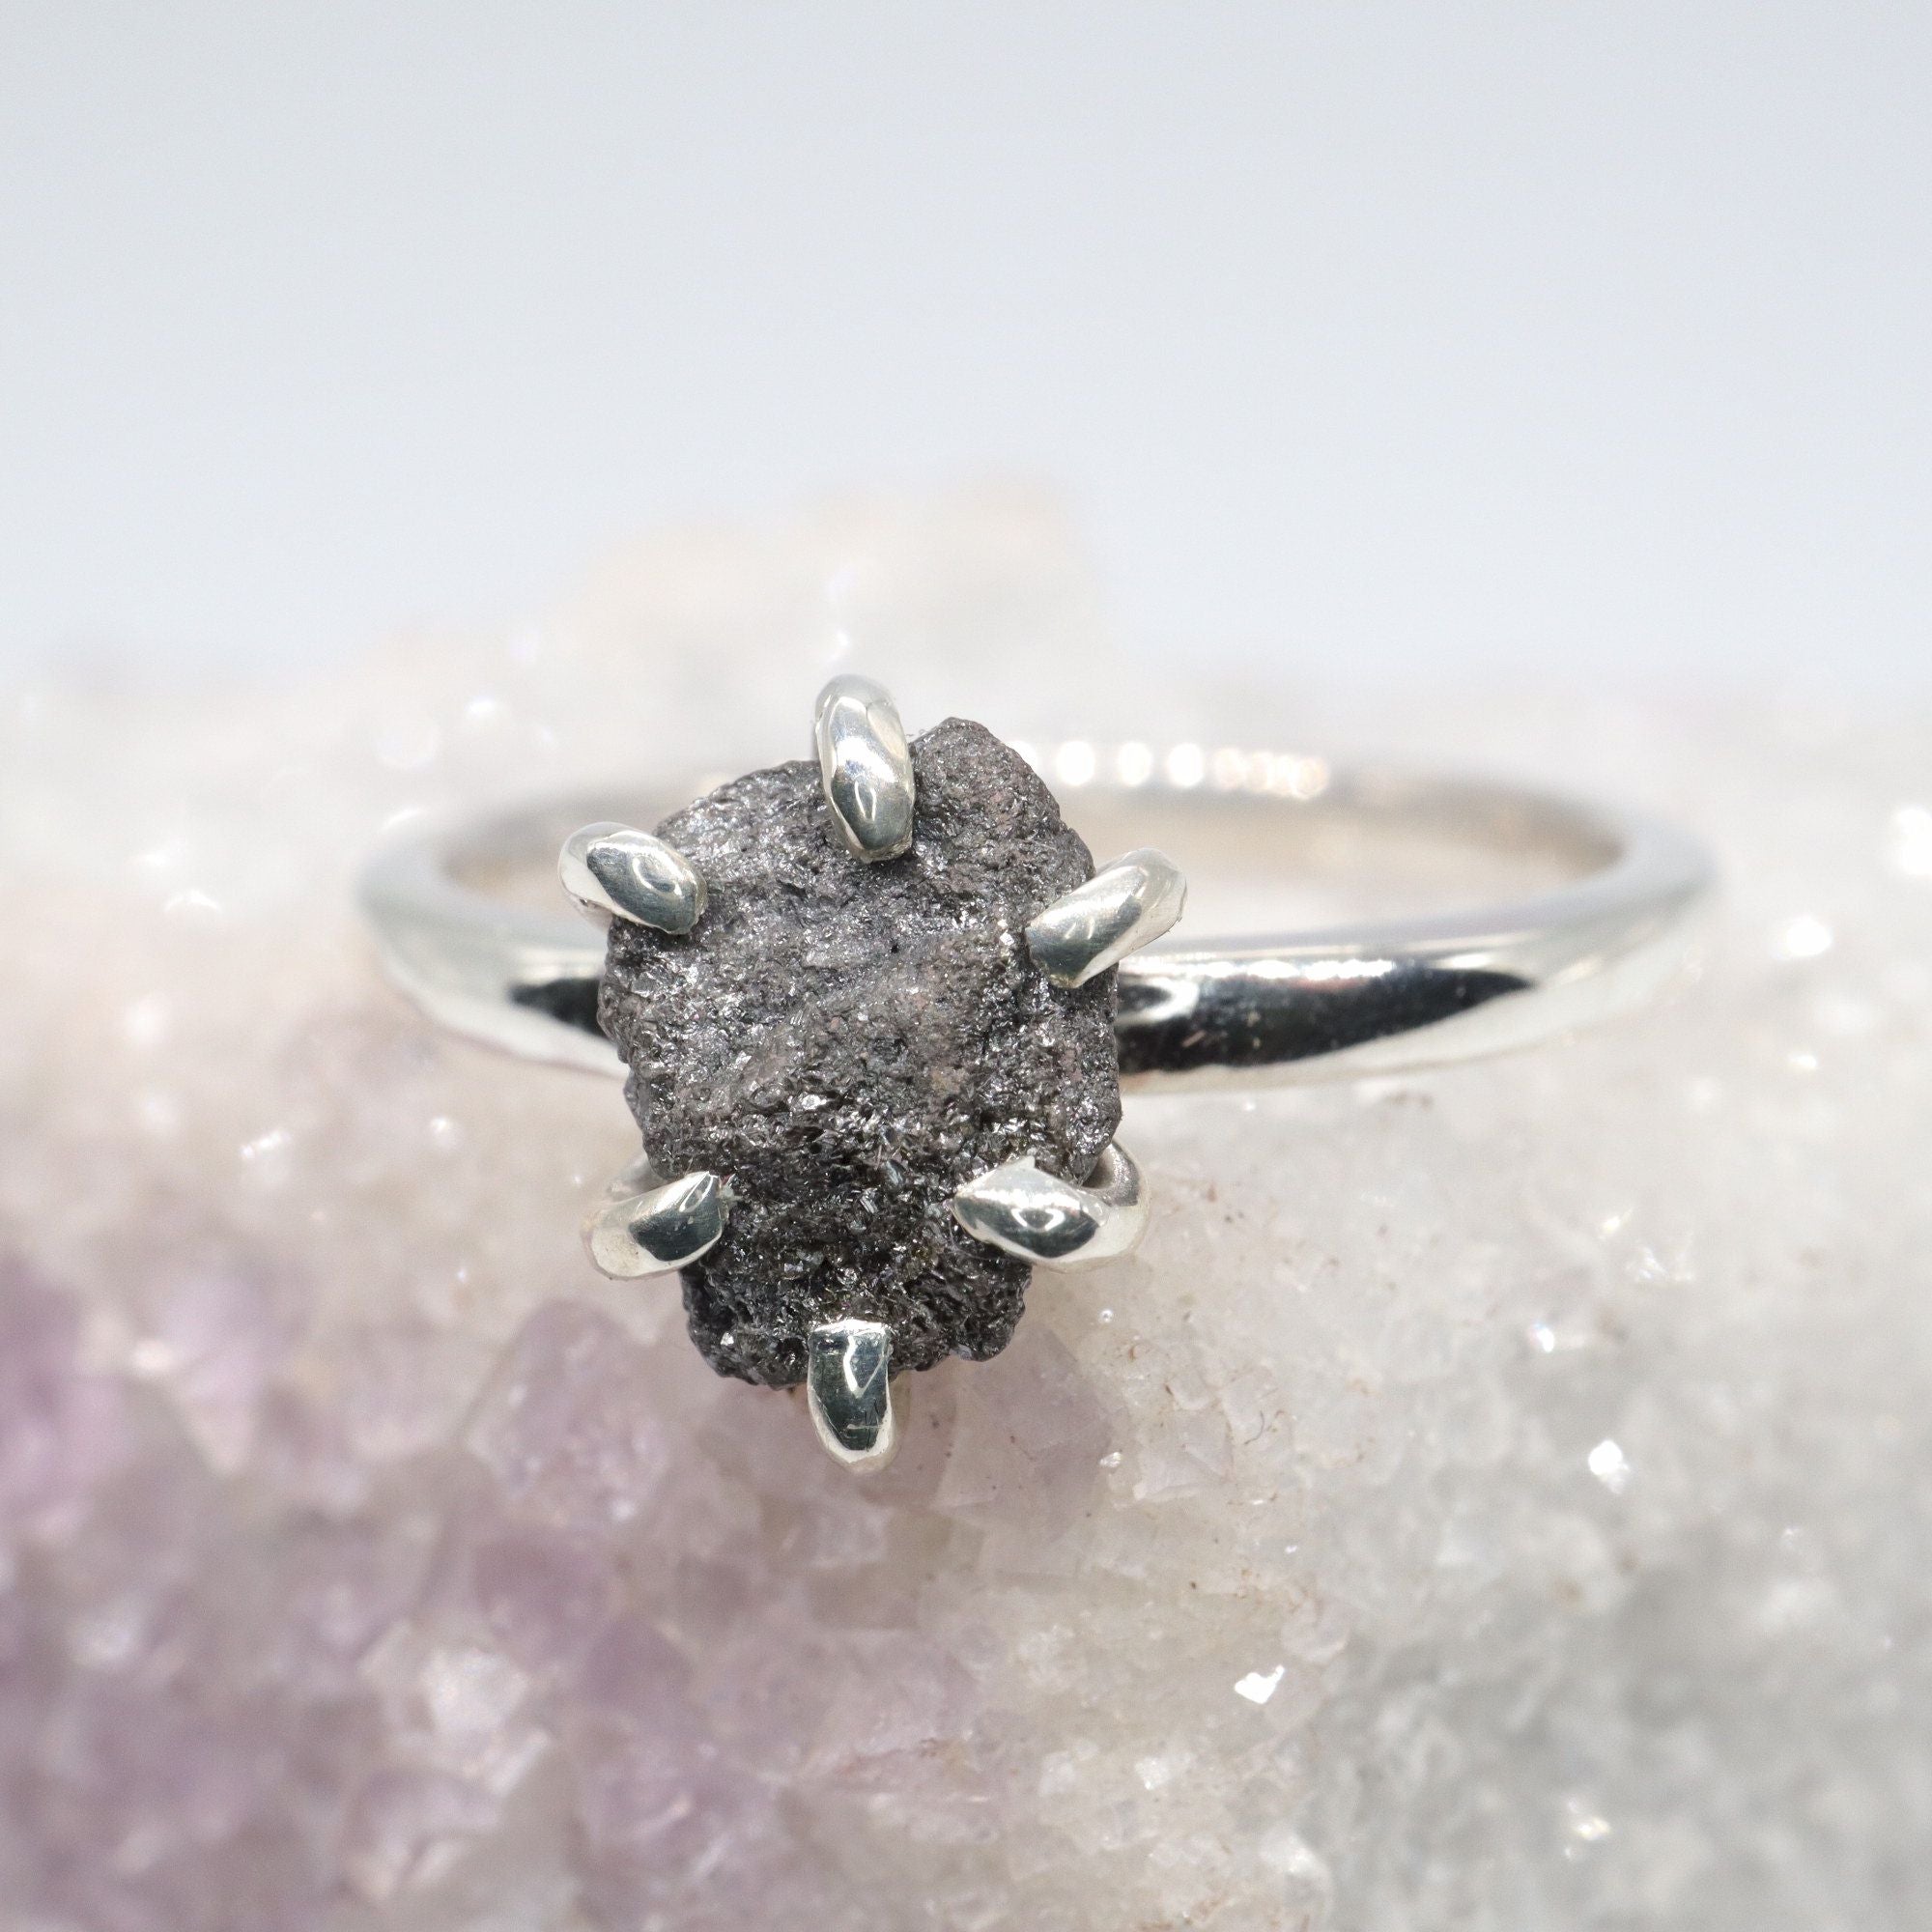 Uncut Diamond Jewelry | The Raw Trend In The Jewelry World. – Gemone Diamond